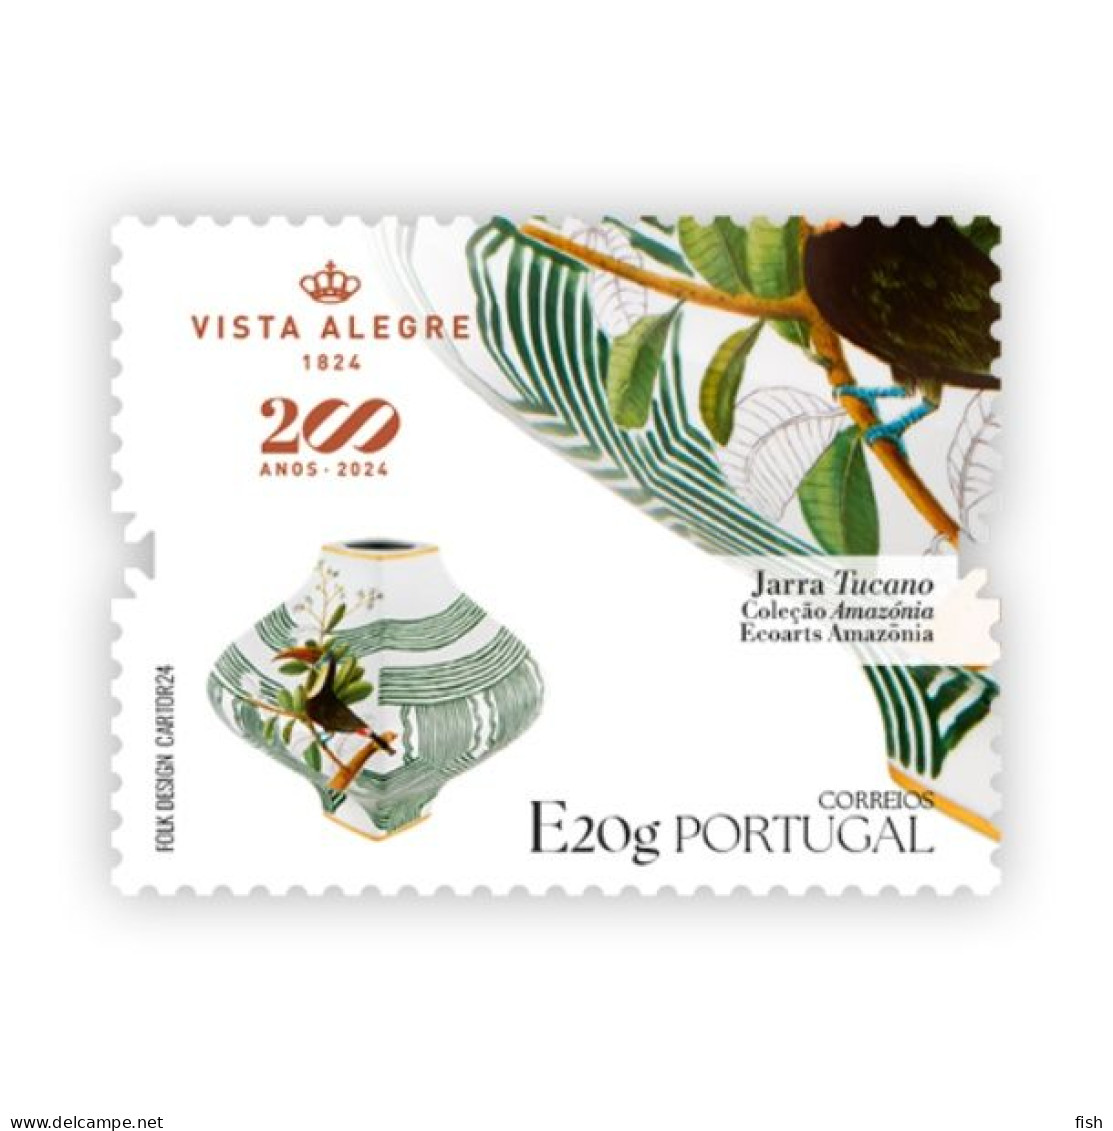 Portugal ** & 200 Years Of Vista Alegre, Tucano Jar, Amazonia Collection, Ecoarte Amazonia 1824-2024 (7199) - Milieubescherming & Klimaat